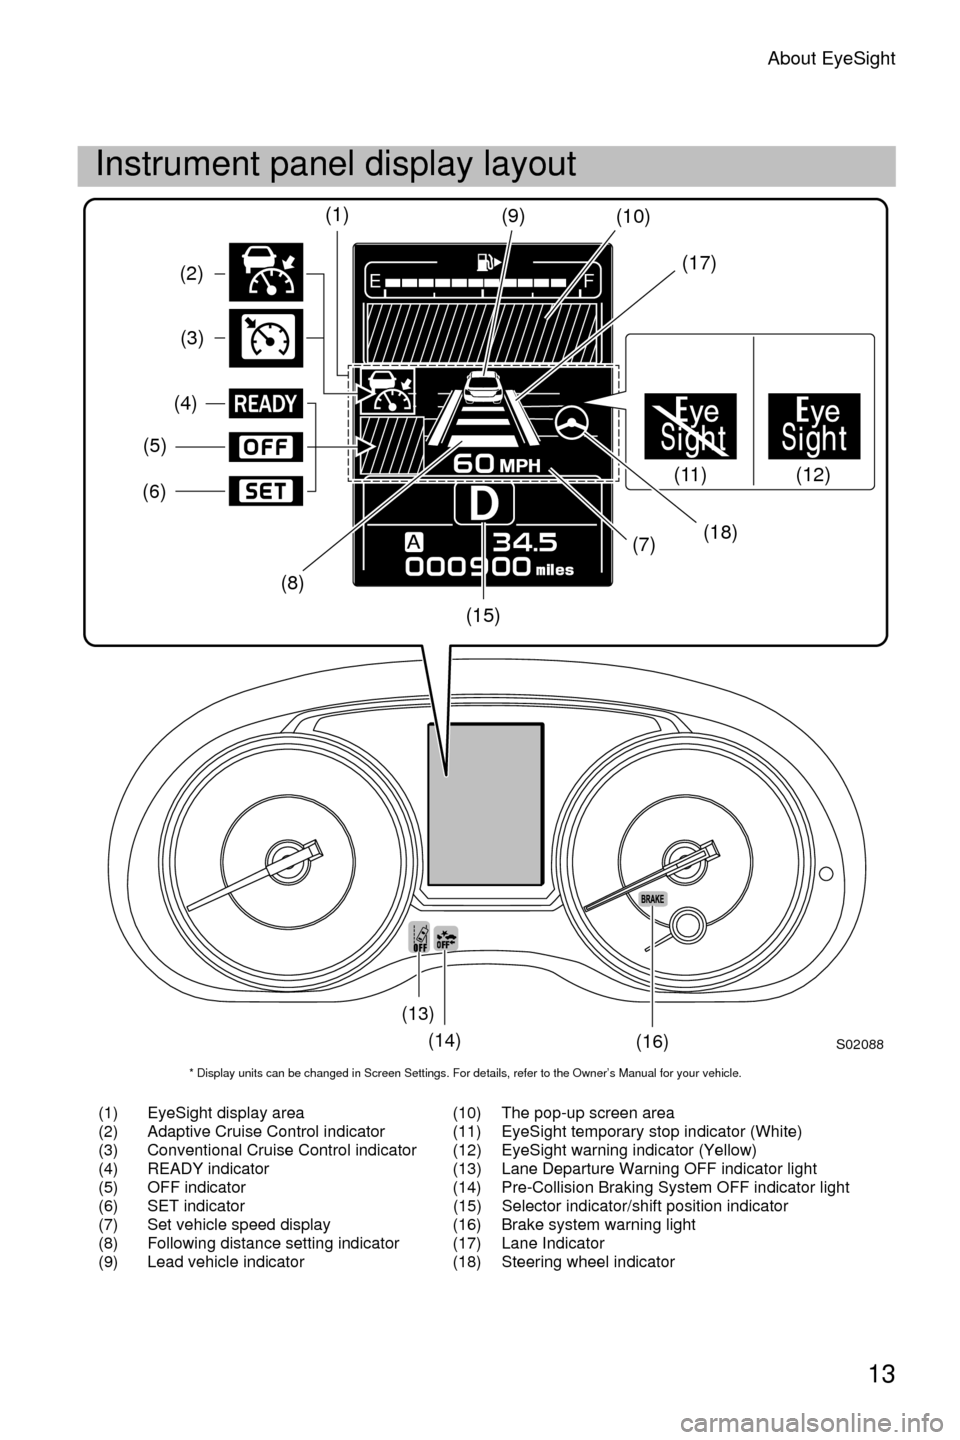 SUBARU IMPREZA 2016 5.G Driving Assist Manual About EyeSight
13
Instrument panel display layout
(1) EyeSight display area(10) The pop-up screen area
(2) Adaptive Cruise Control indicator (11) EyeSight temporary stop indicator (White)
(3) Conventi